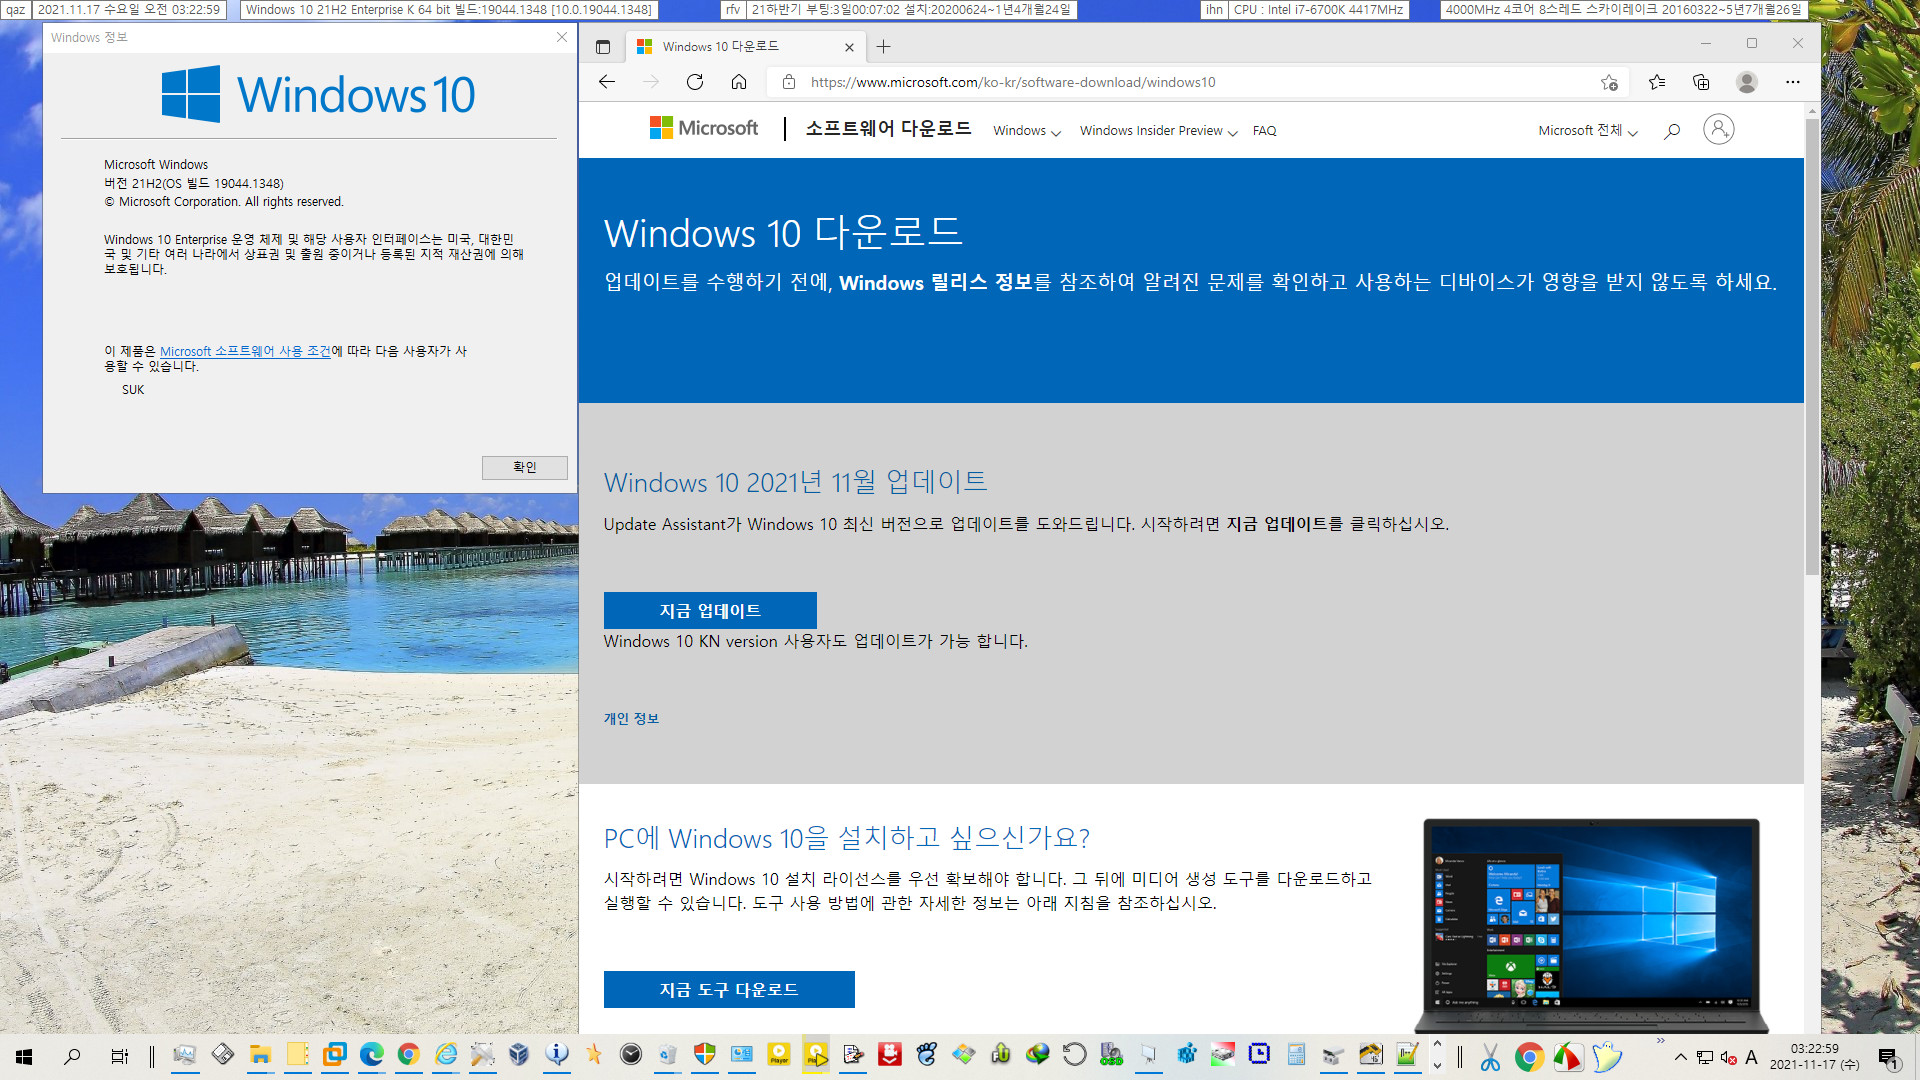 Windows 10 버전 21H2 (2021년 11월 업데이트) 정식 출시되었습니다 - 현재 MS의 윈도우 10 다운로드 페이지2021-11-17_032259.jpg